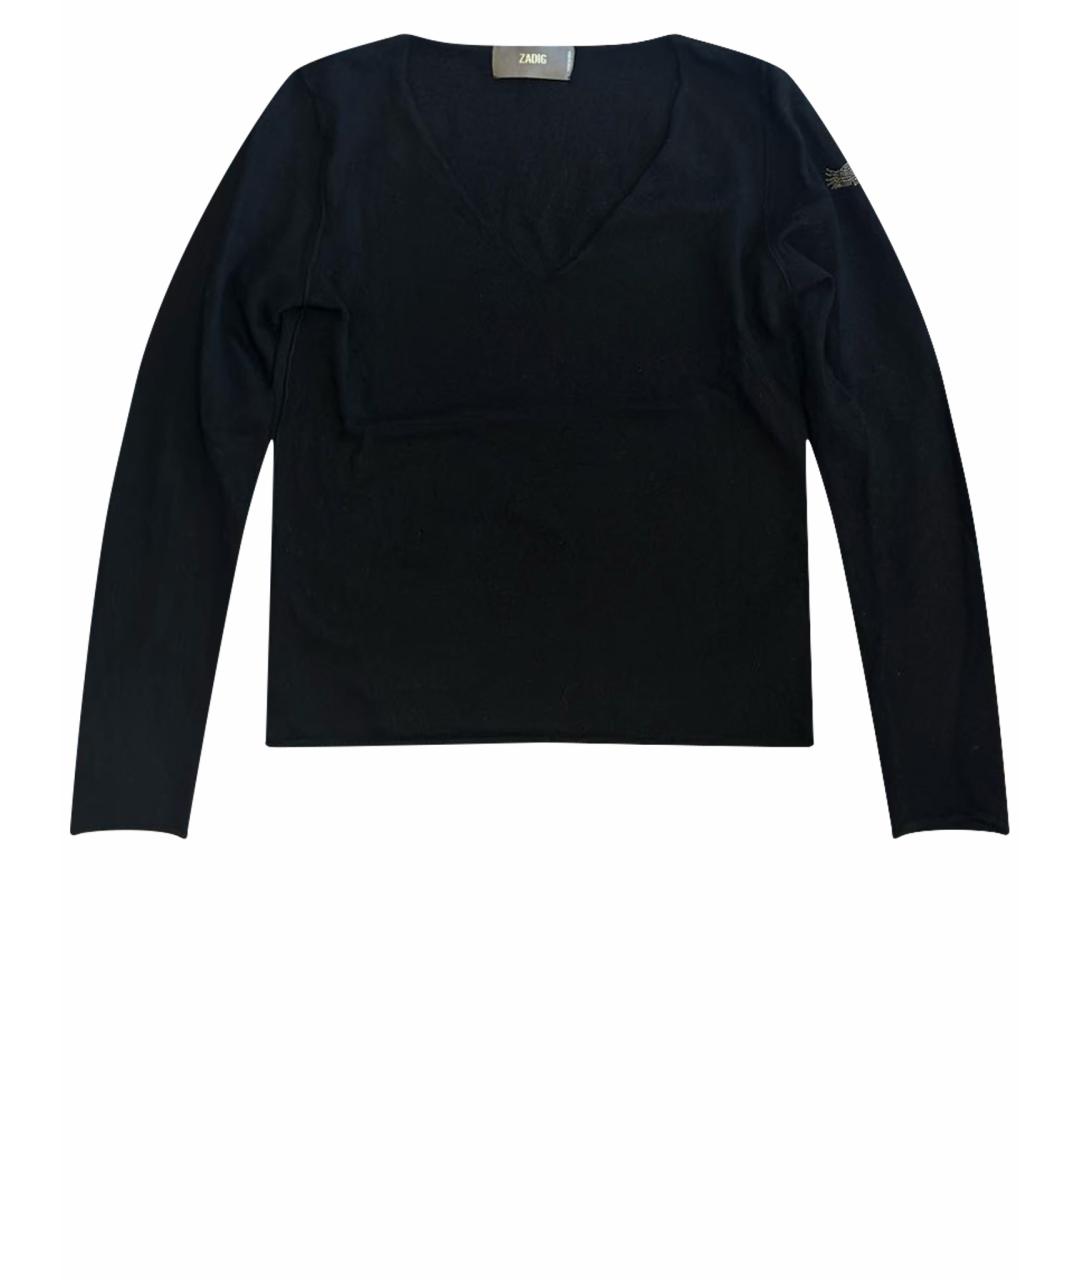 ZADIG & VOLTAIRE Черный шерстяной джемпер / свитер, фото 1